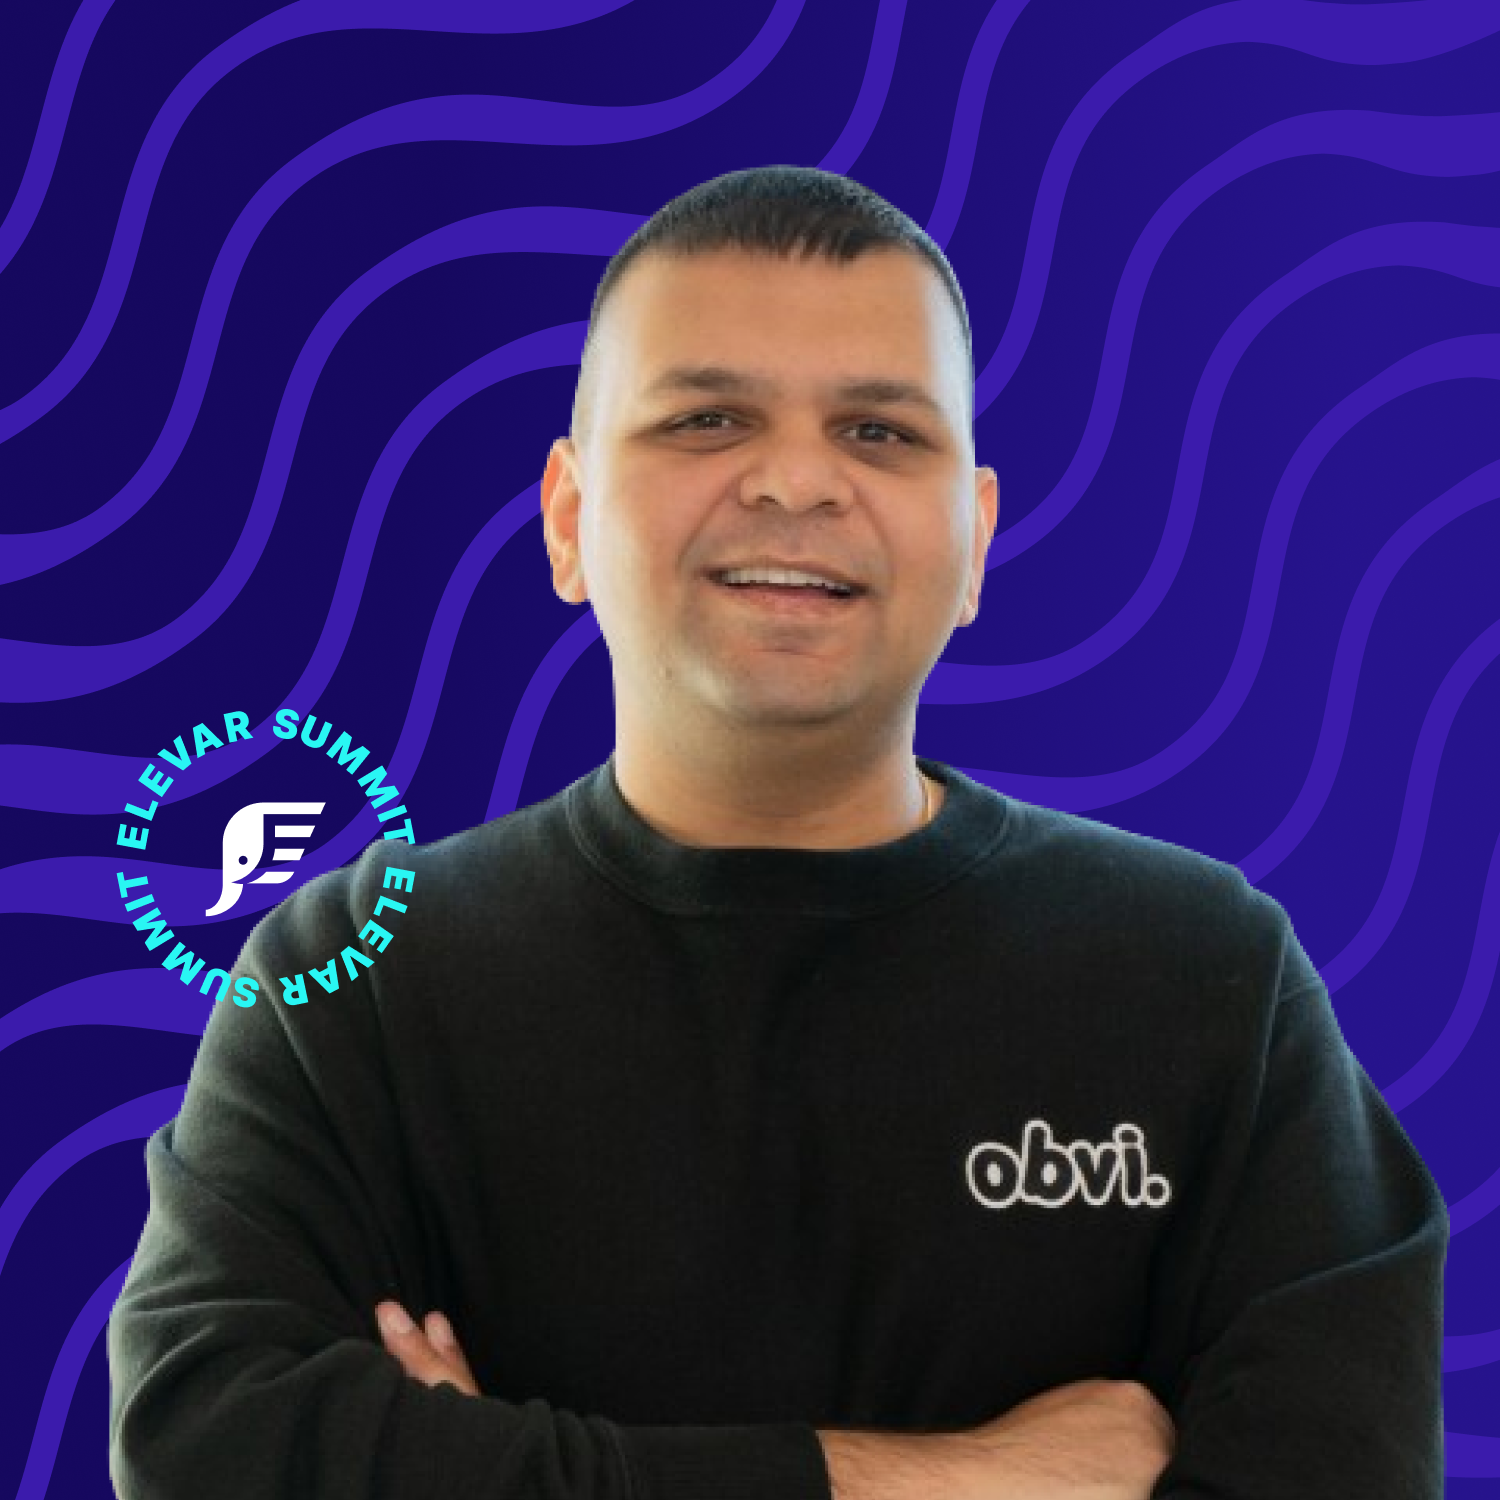 Headshot for Ronak Shah on purple background with Elevar Summit logo